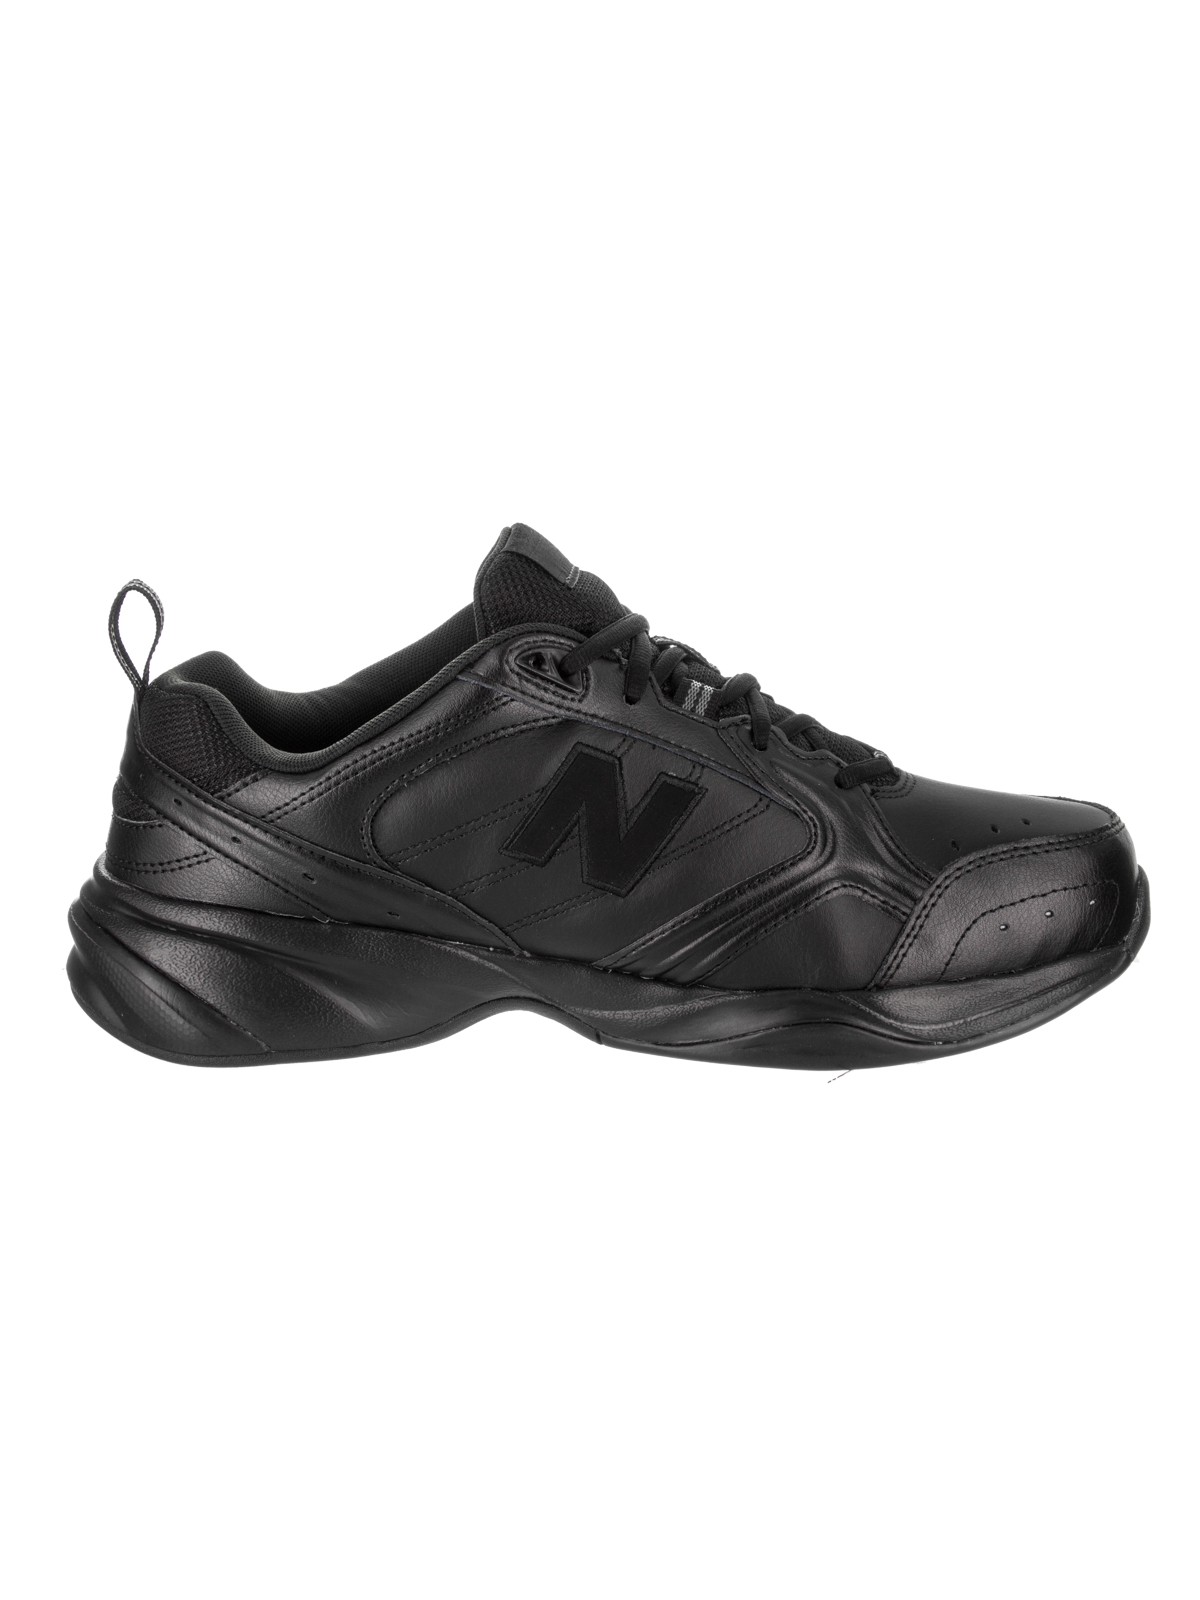 new balance men's mx624v2 casual comfort training shoe, black, 10.5 4e us - image 2 of 5